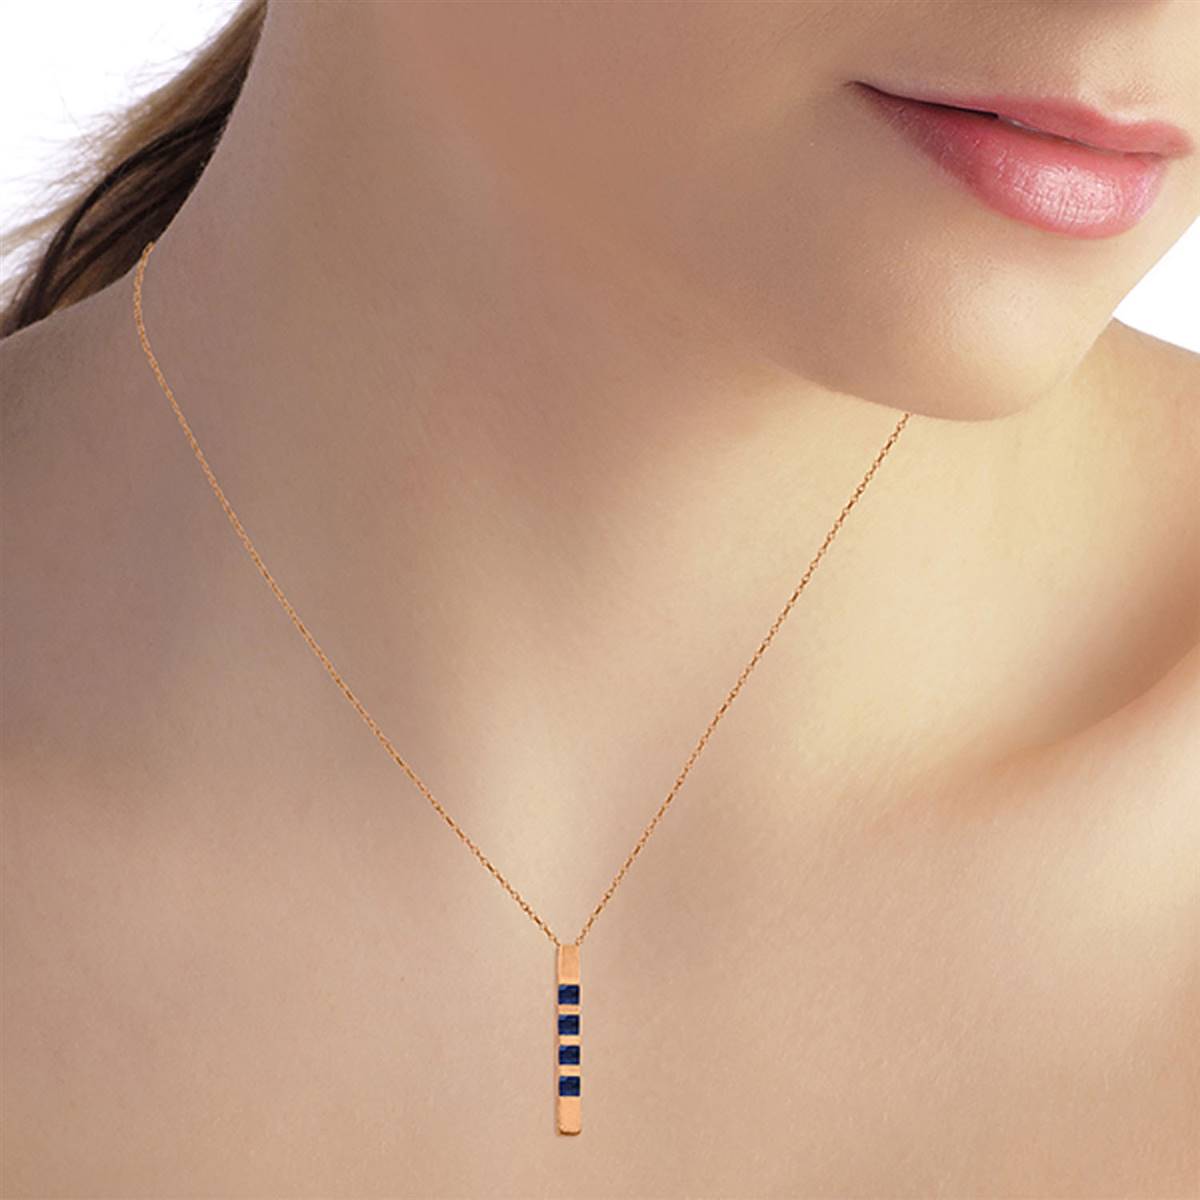 14K Solid Rose Gold Necklace Bar w/ Natural Sapphires